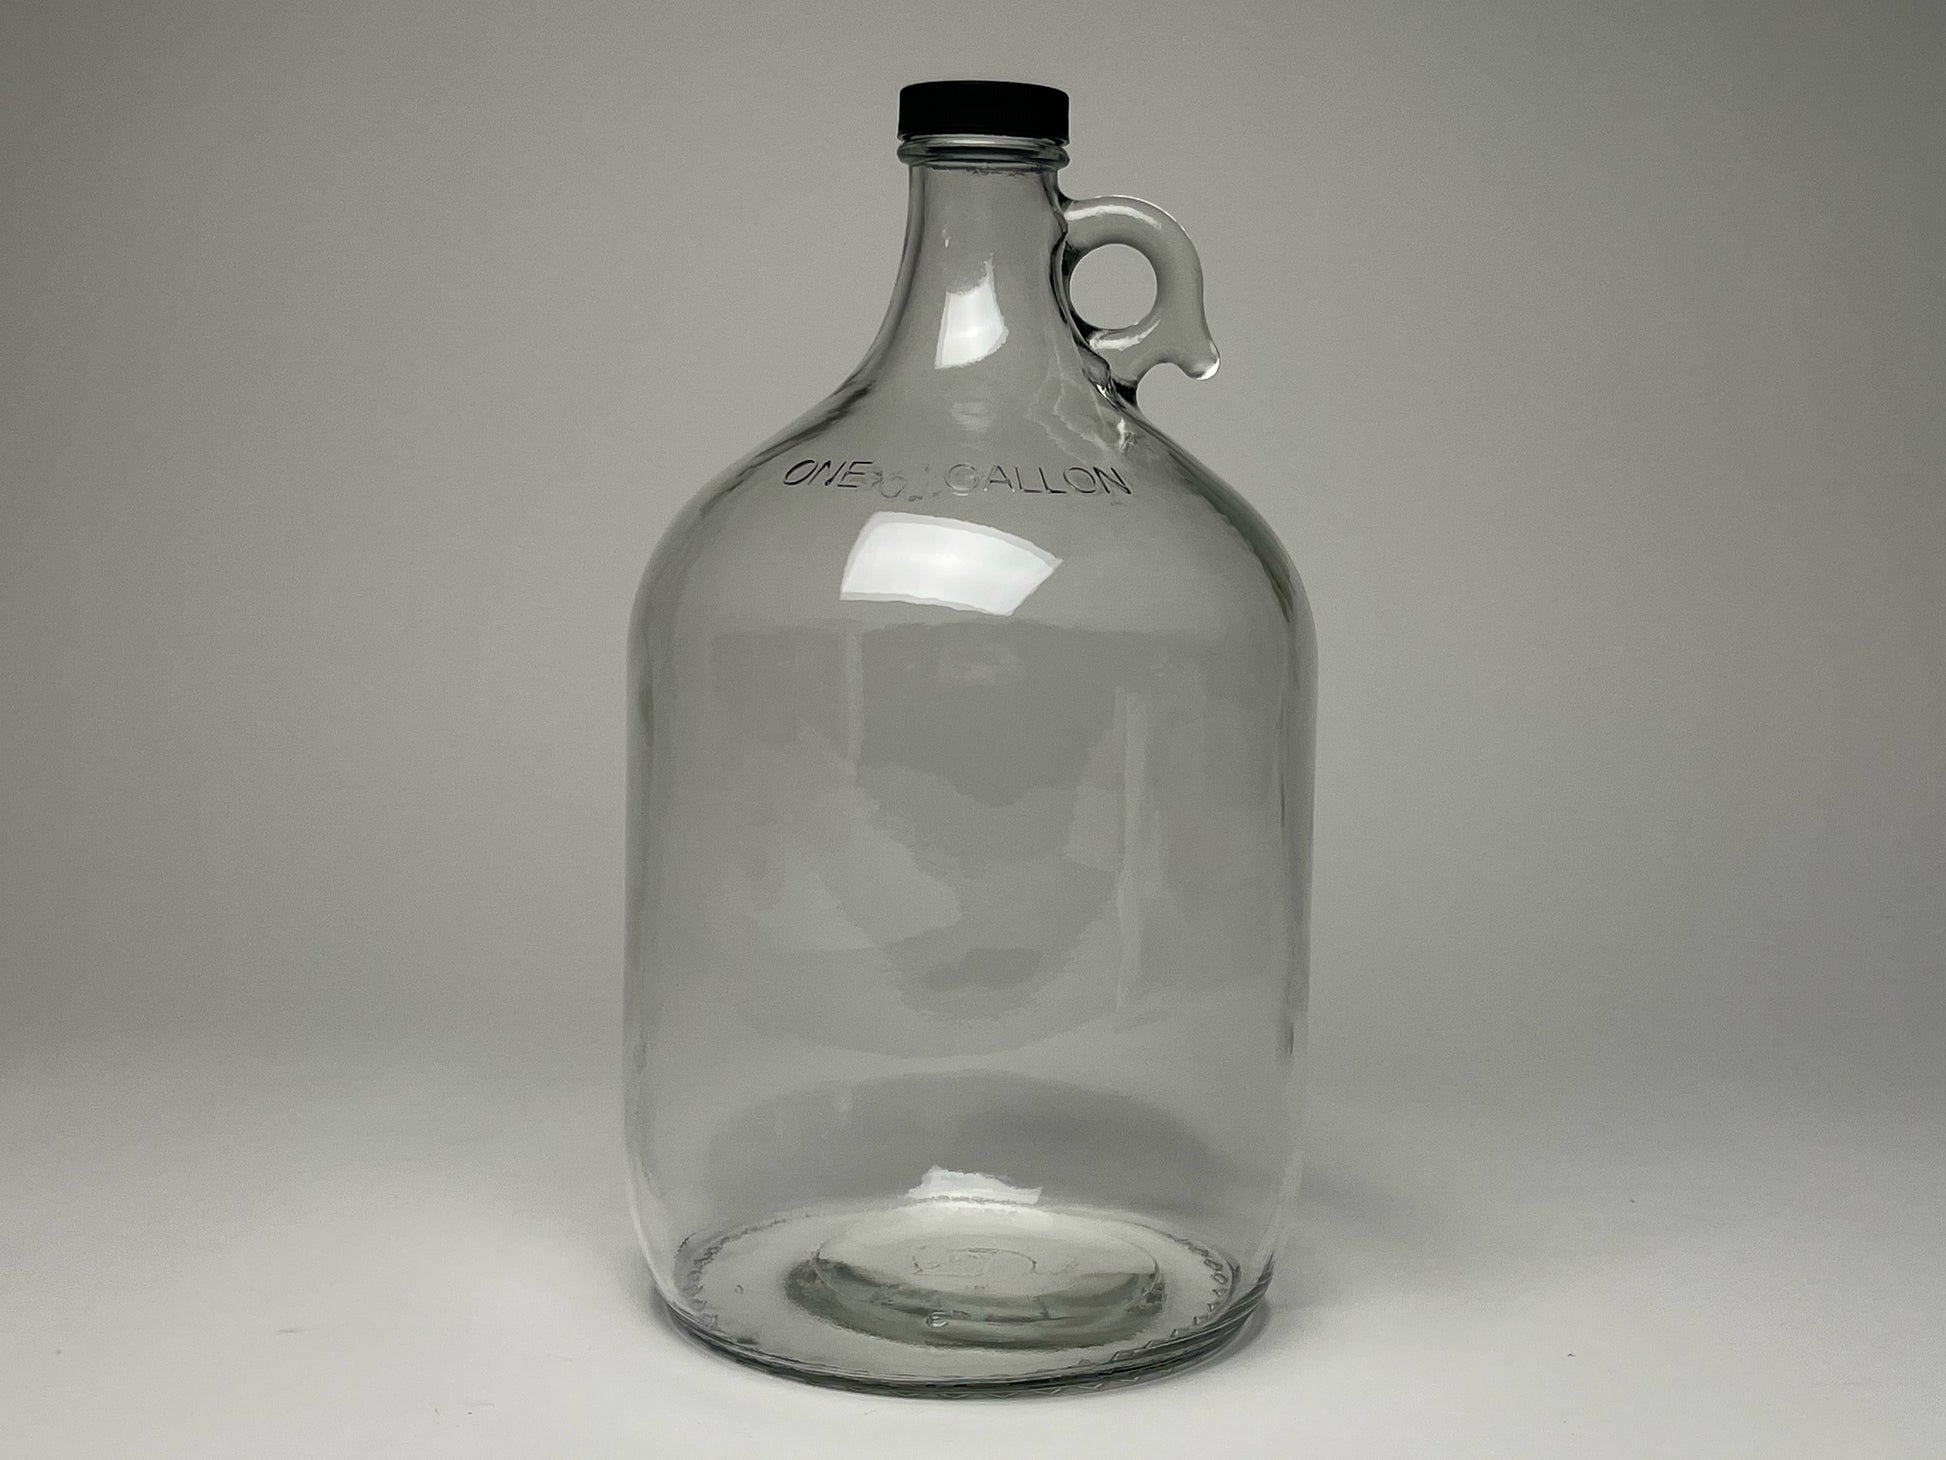 Glass Jugs - 1 Gallon S-18034 - Uline